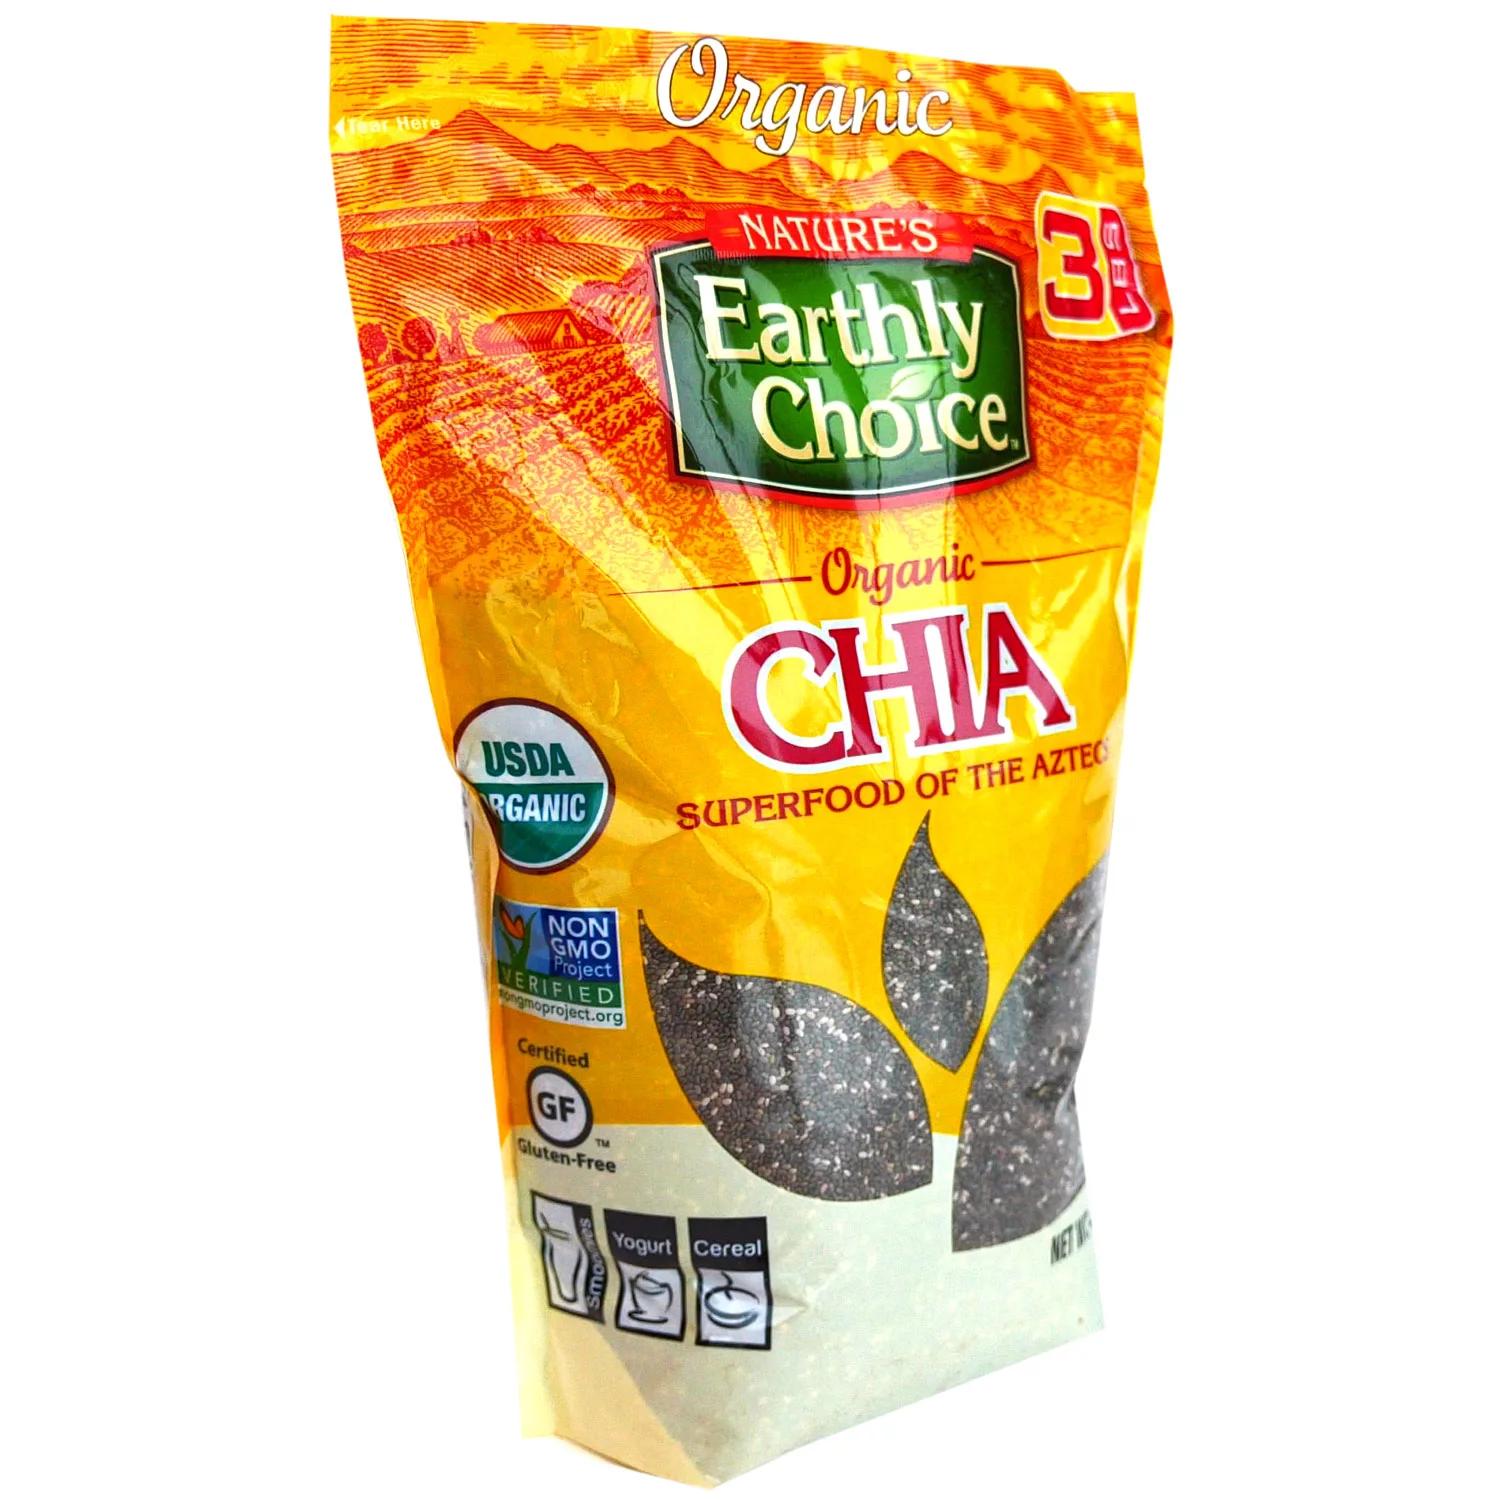 Nature's Earthly Choice Organic Chia